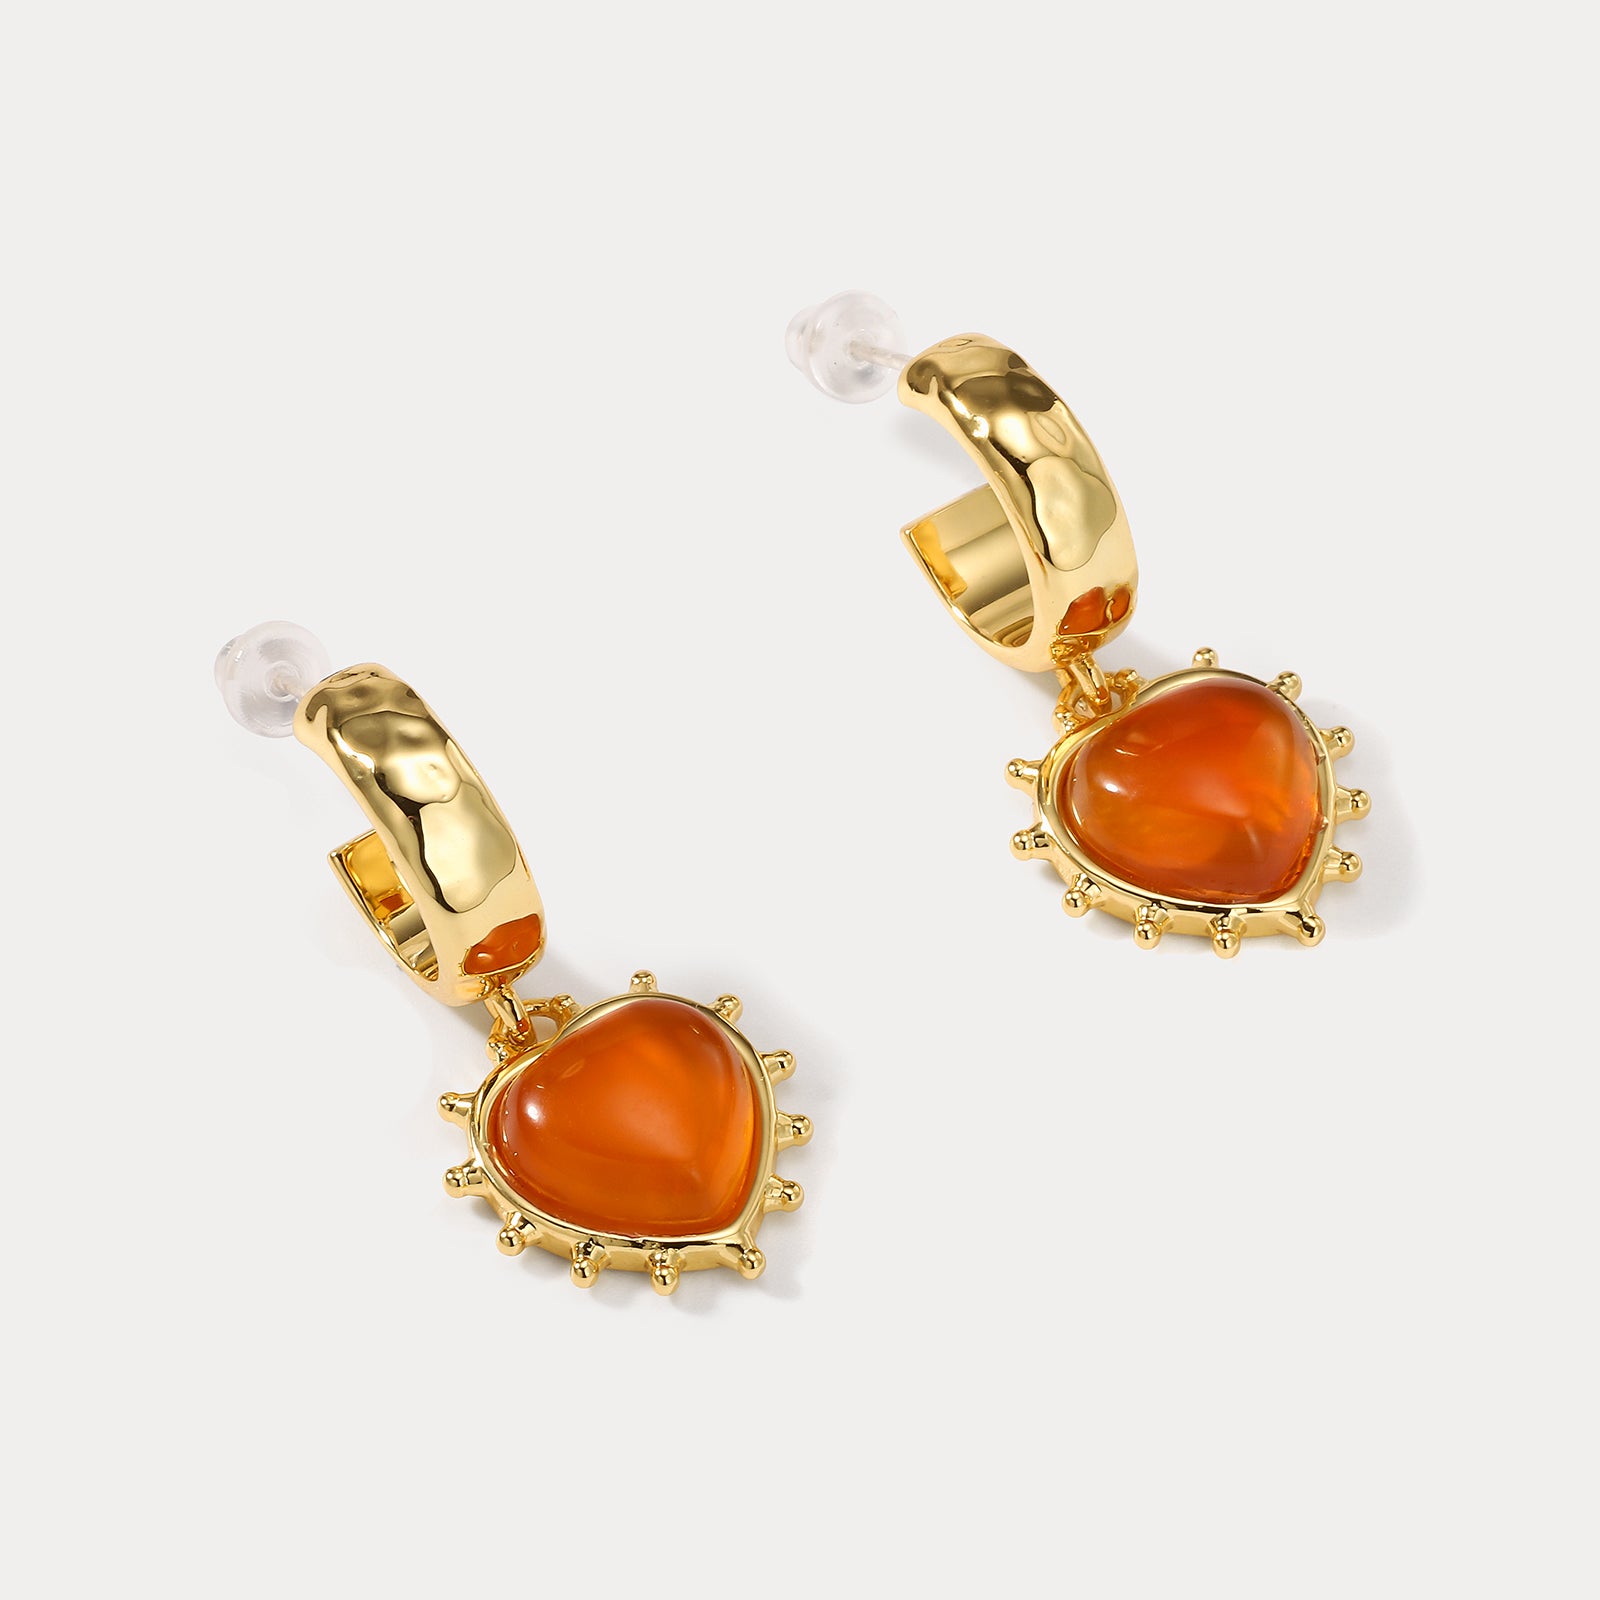 Romantic Heart Orange Fashion Earrings